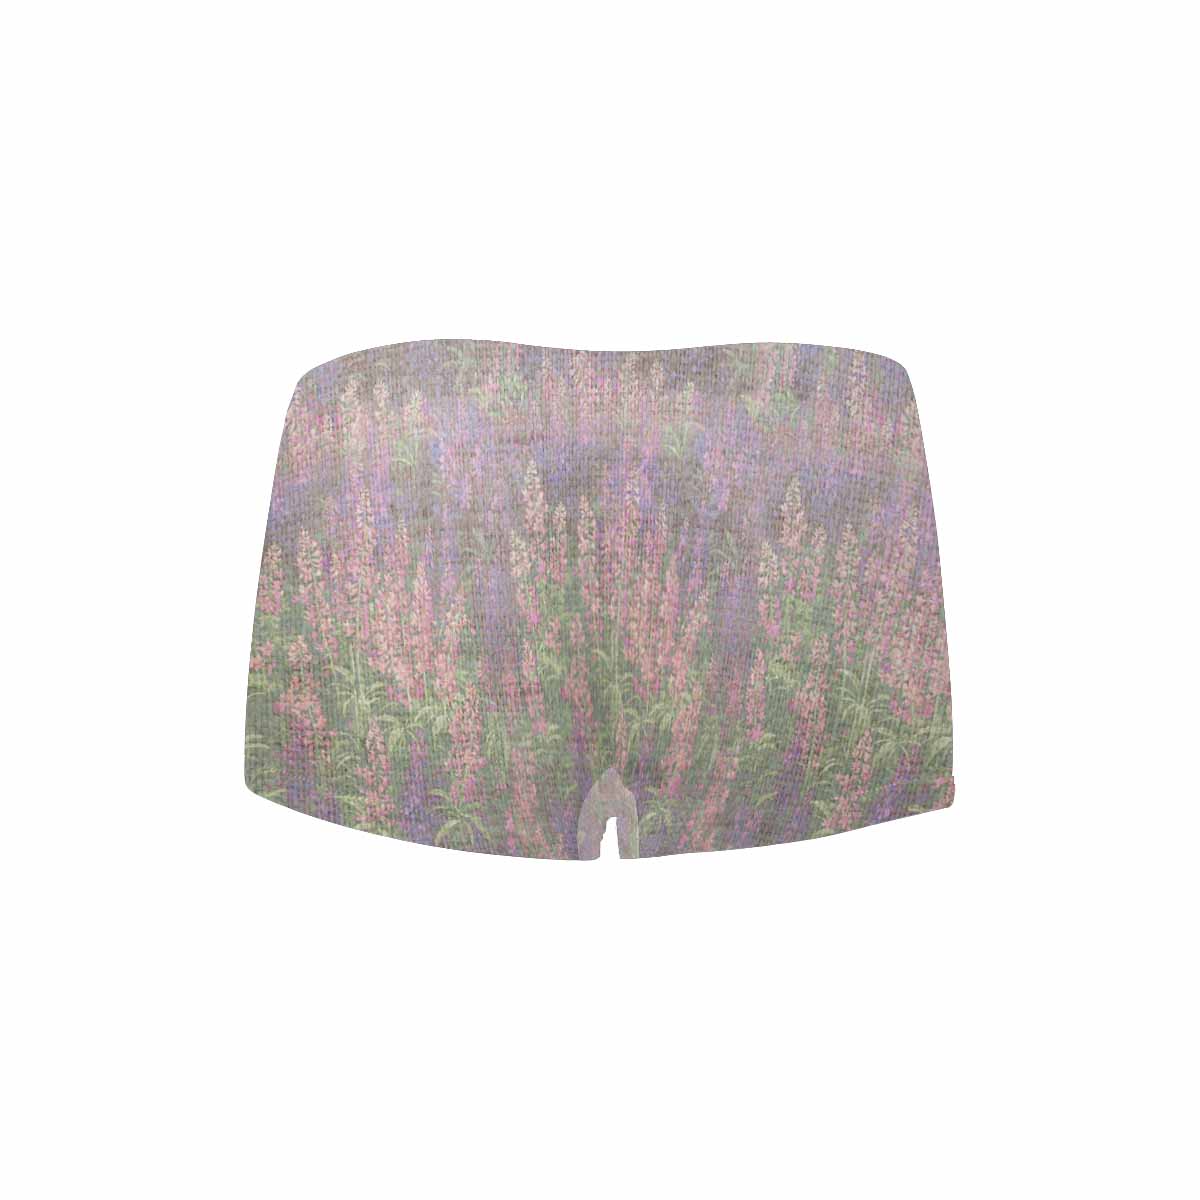 Floral 2, boyshorts, daisy dukes, pum pum shorts, panties, design 22